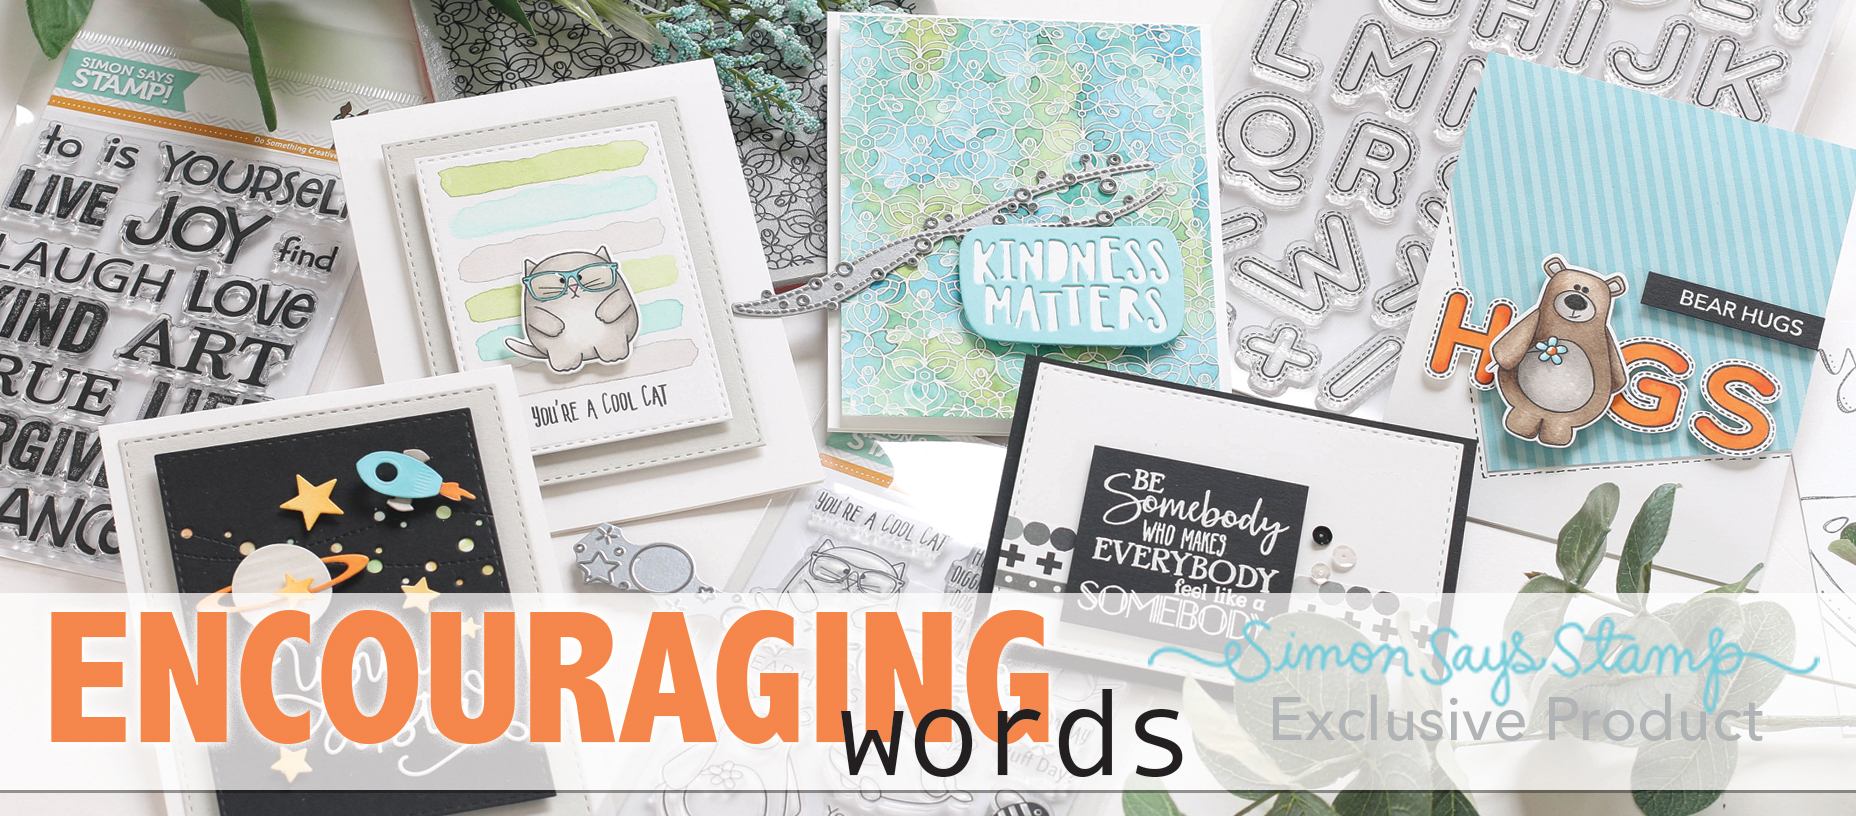 Encouraging Words Blog Hop